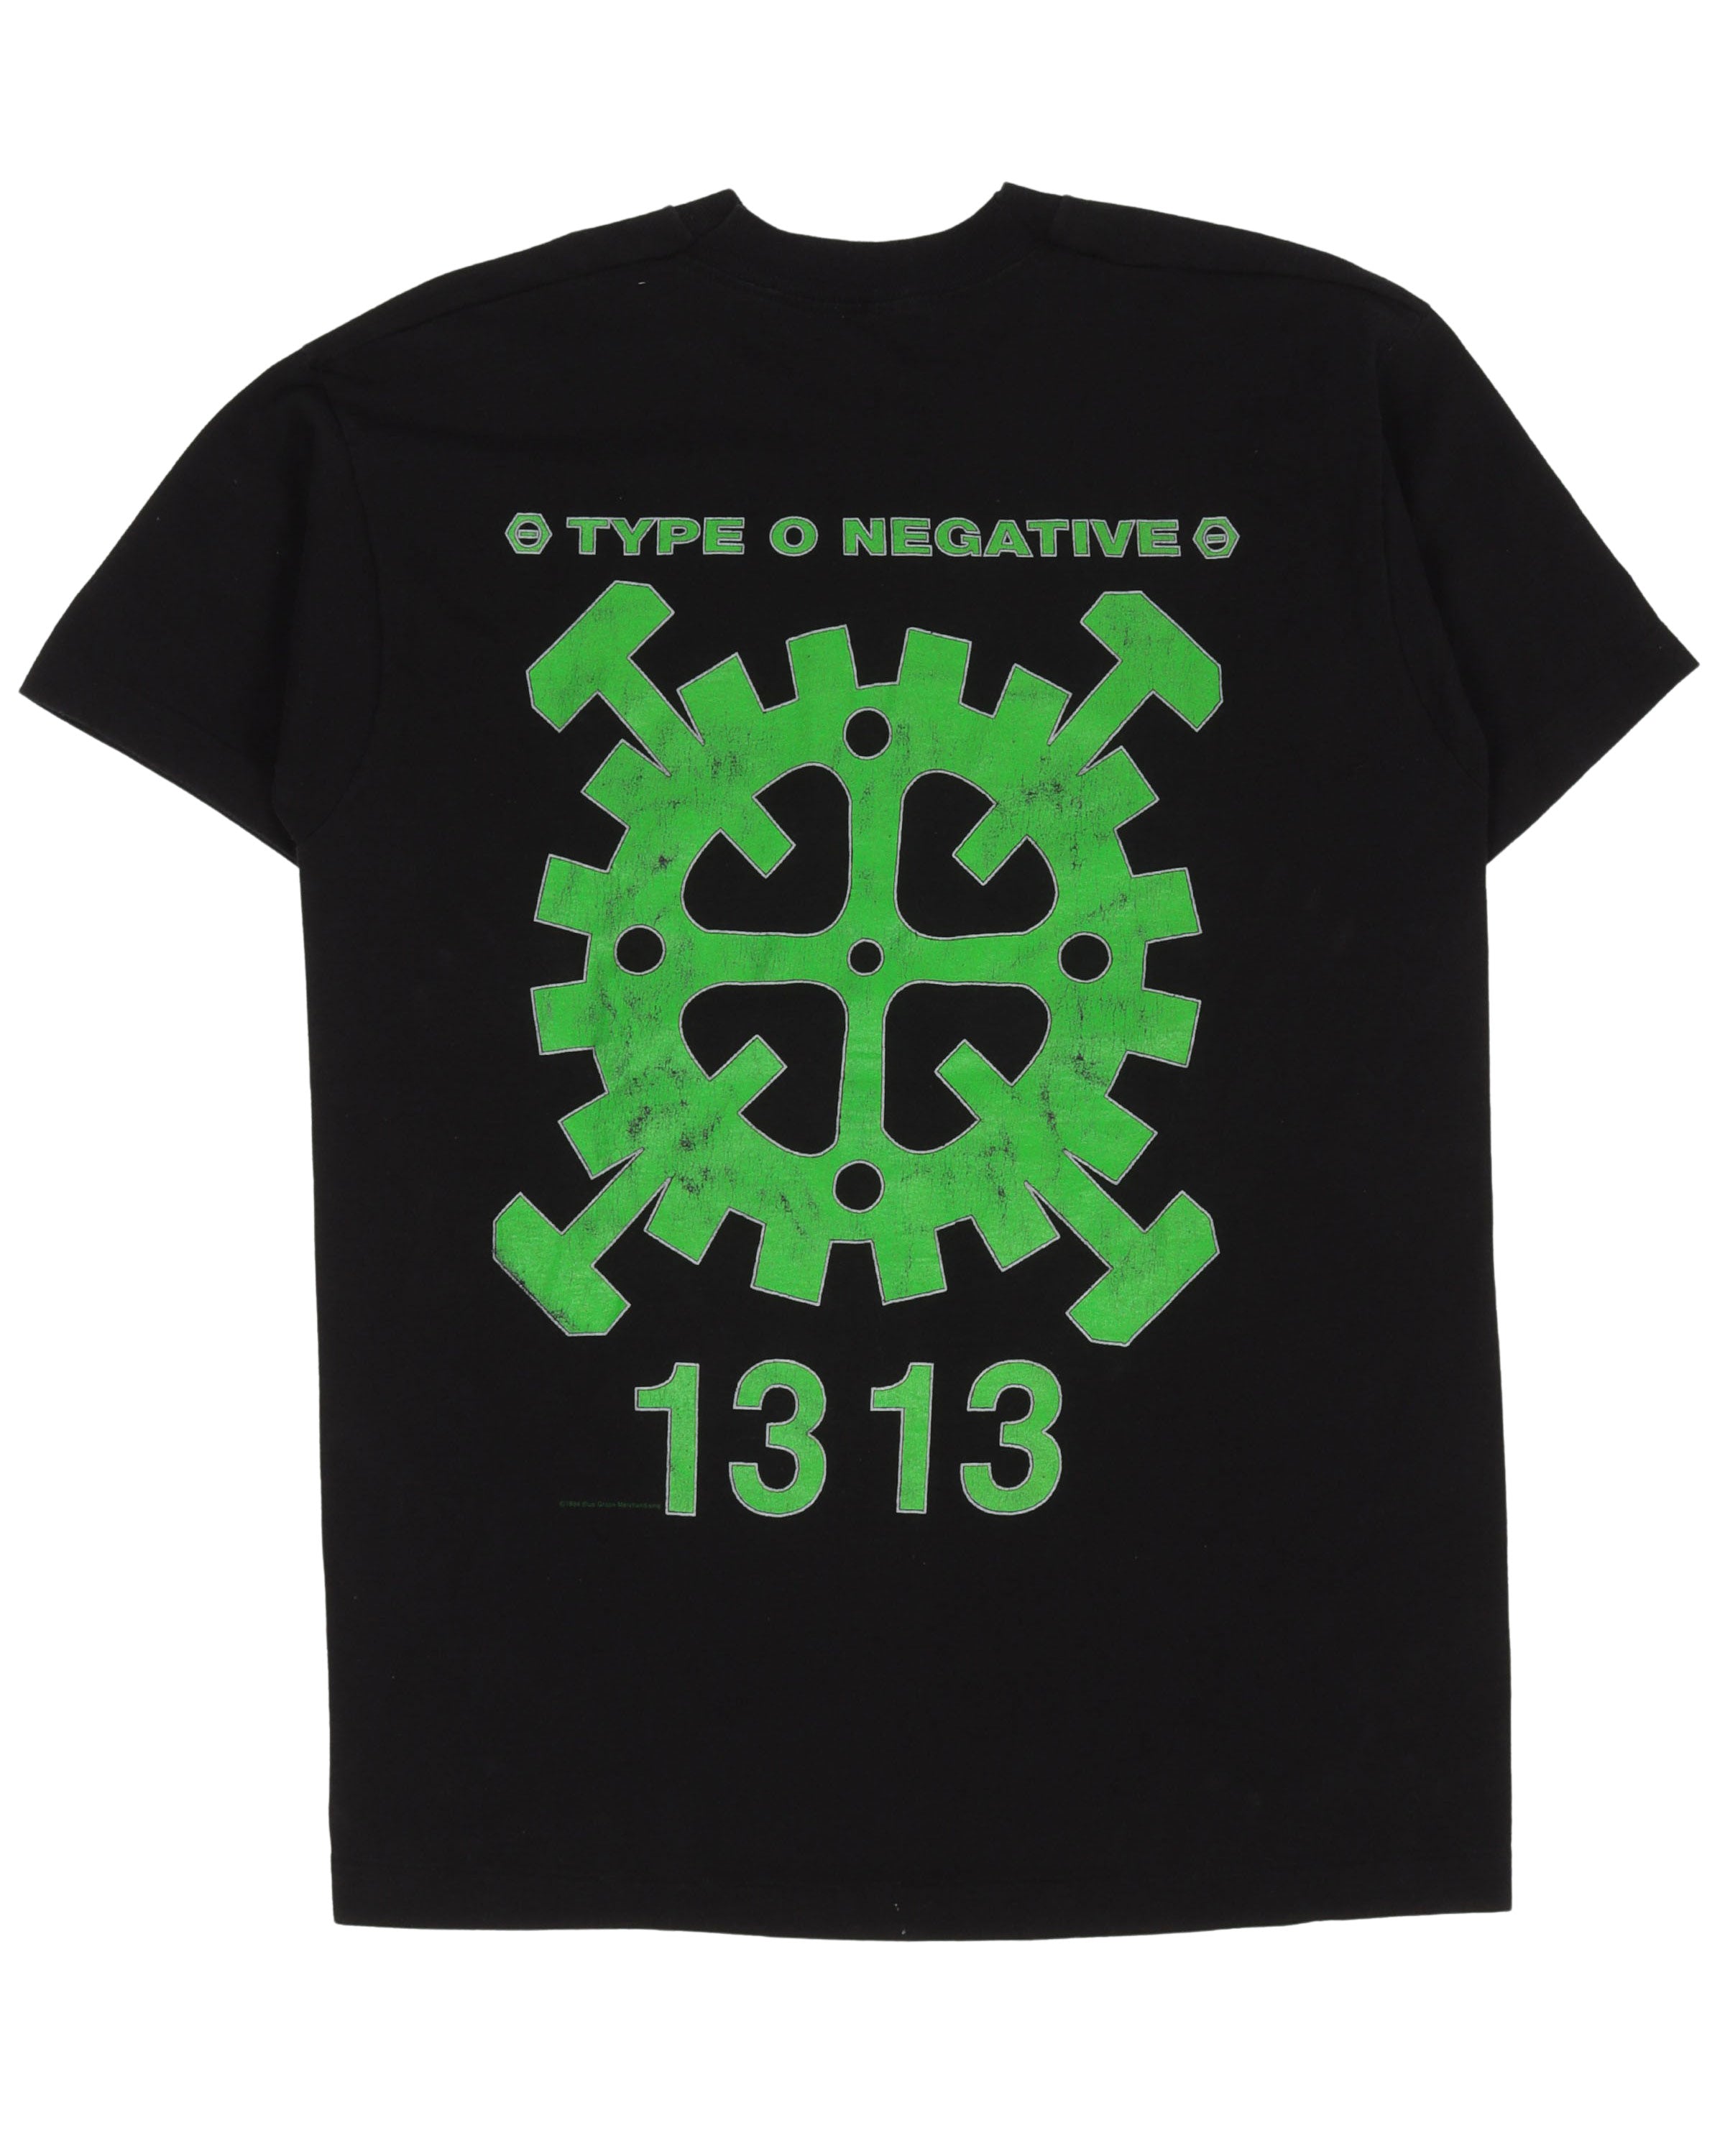 Type O Negative "1313" T-Shirt